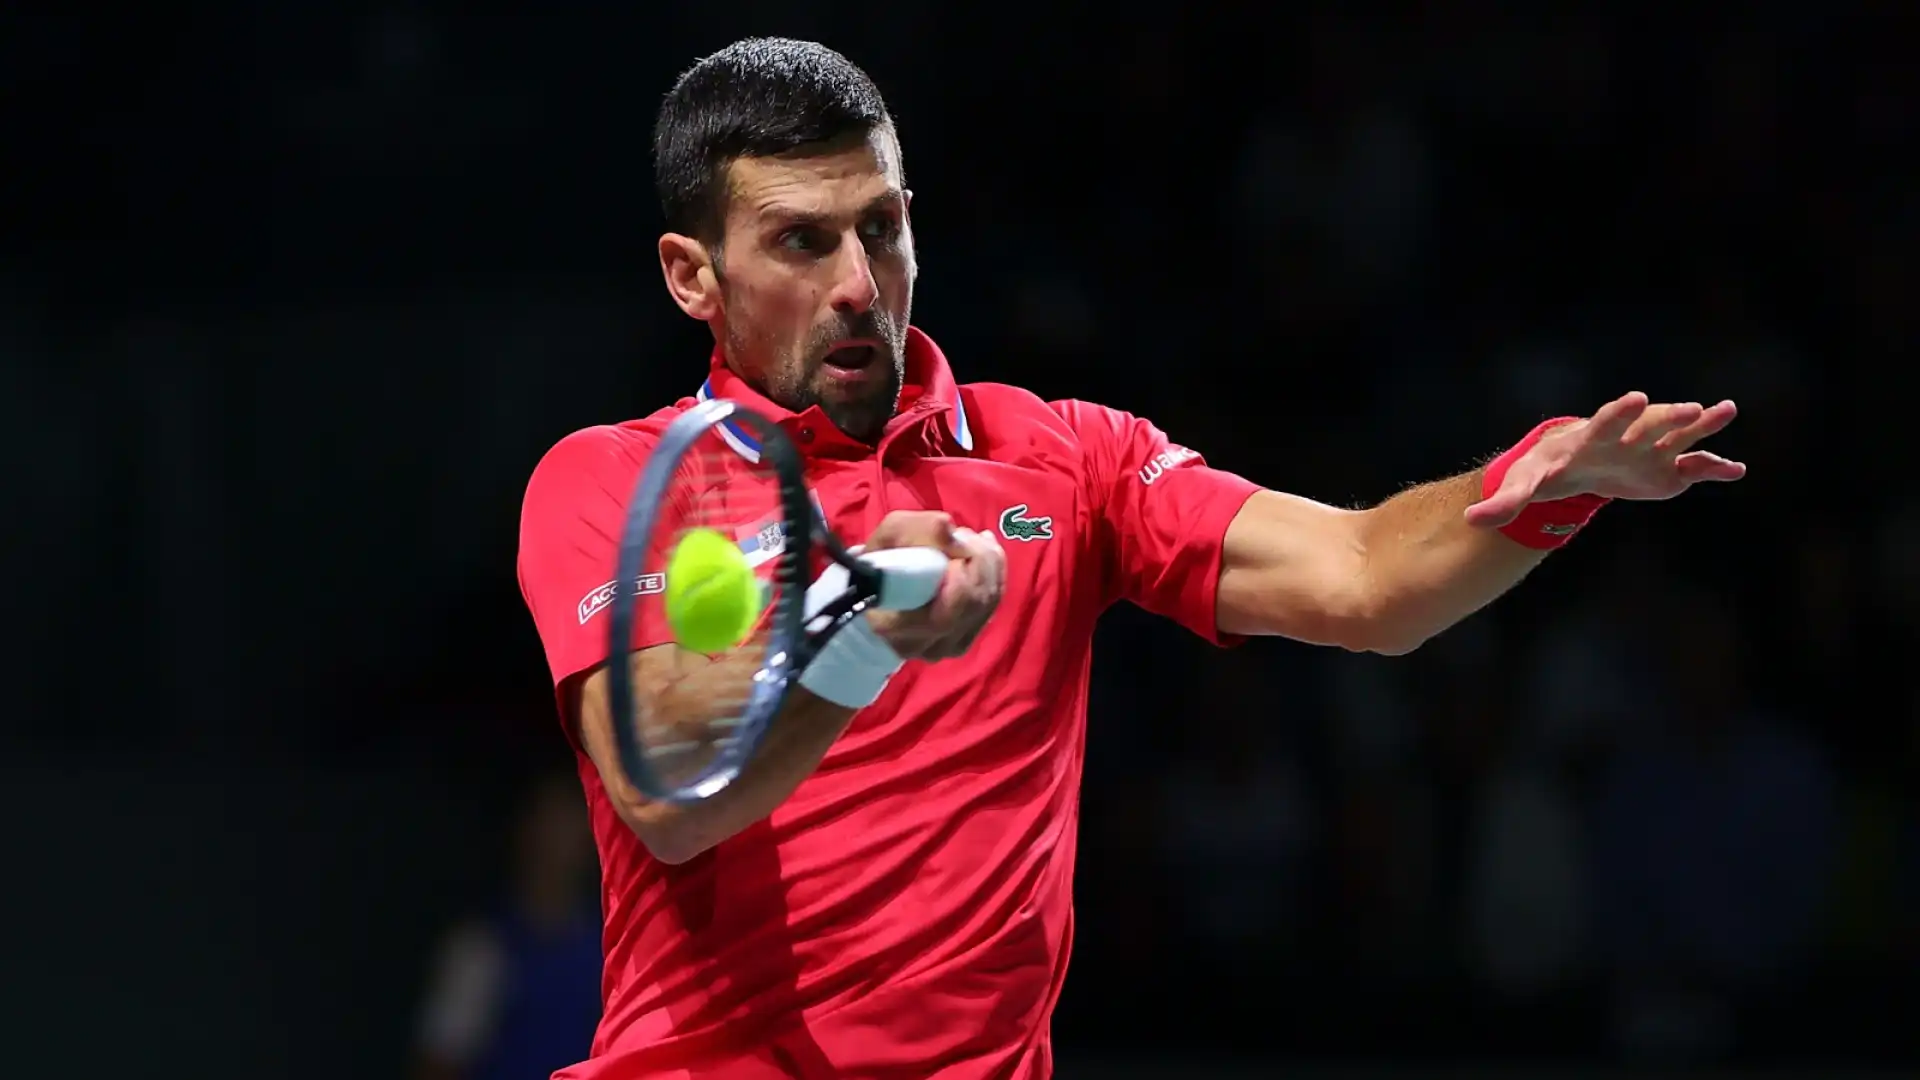 Coppa Davis, sarà Italia-Serbia: il rematch fra Jannik Sinner e Novak Djokovic è servito